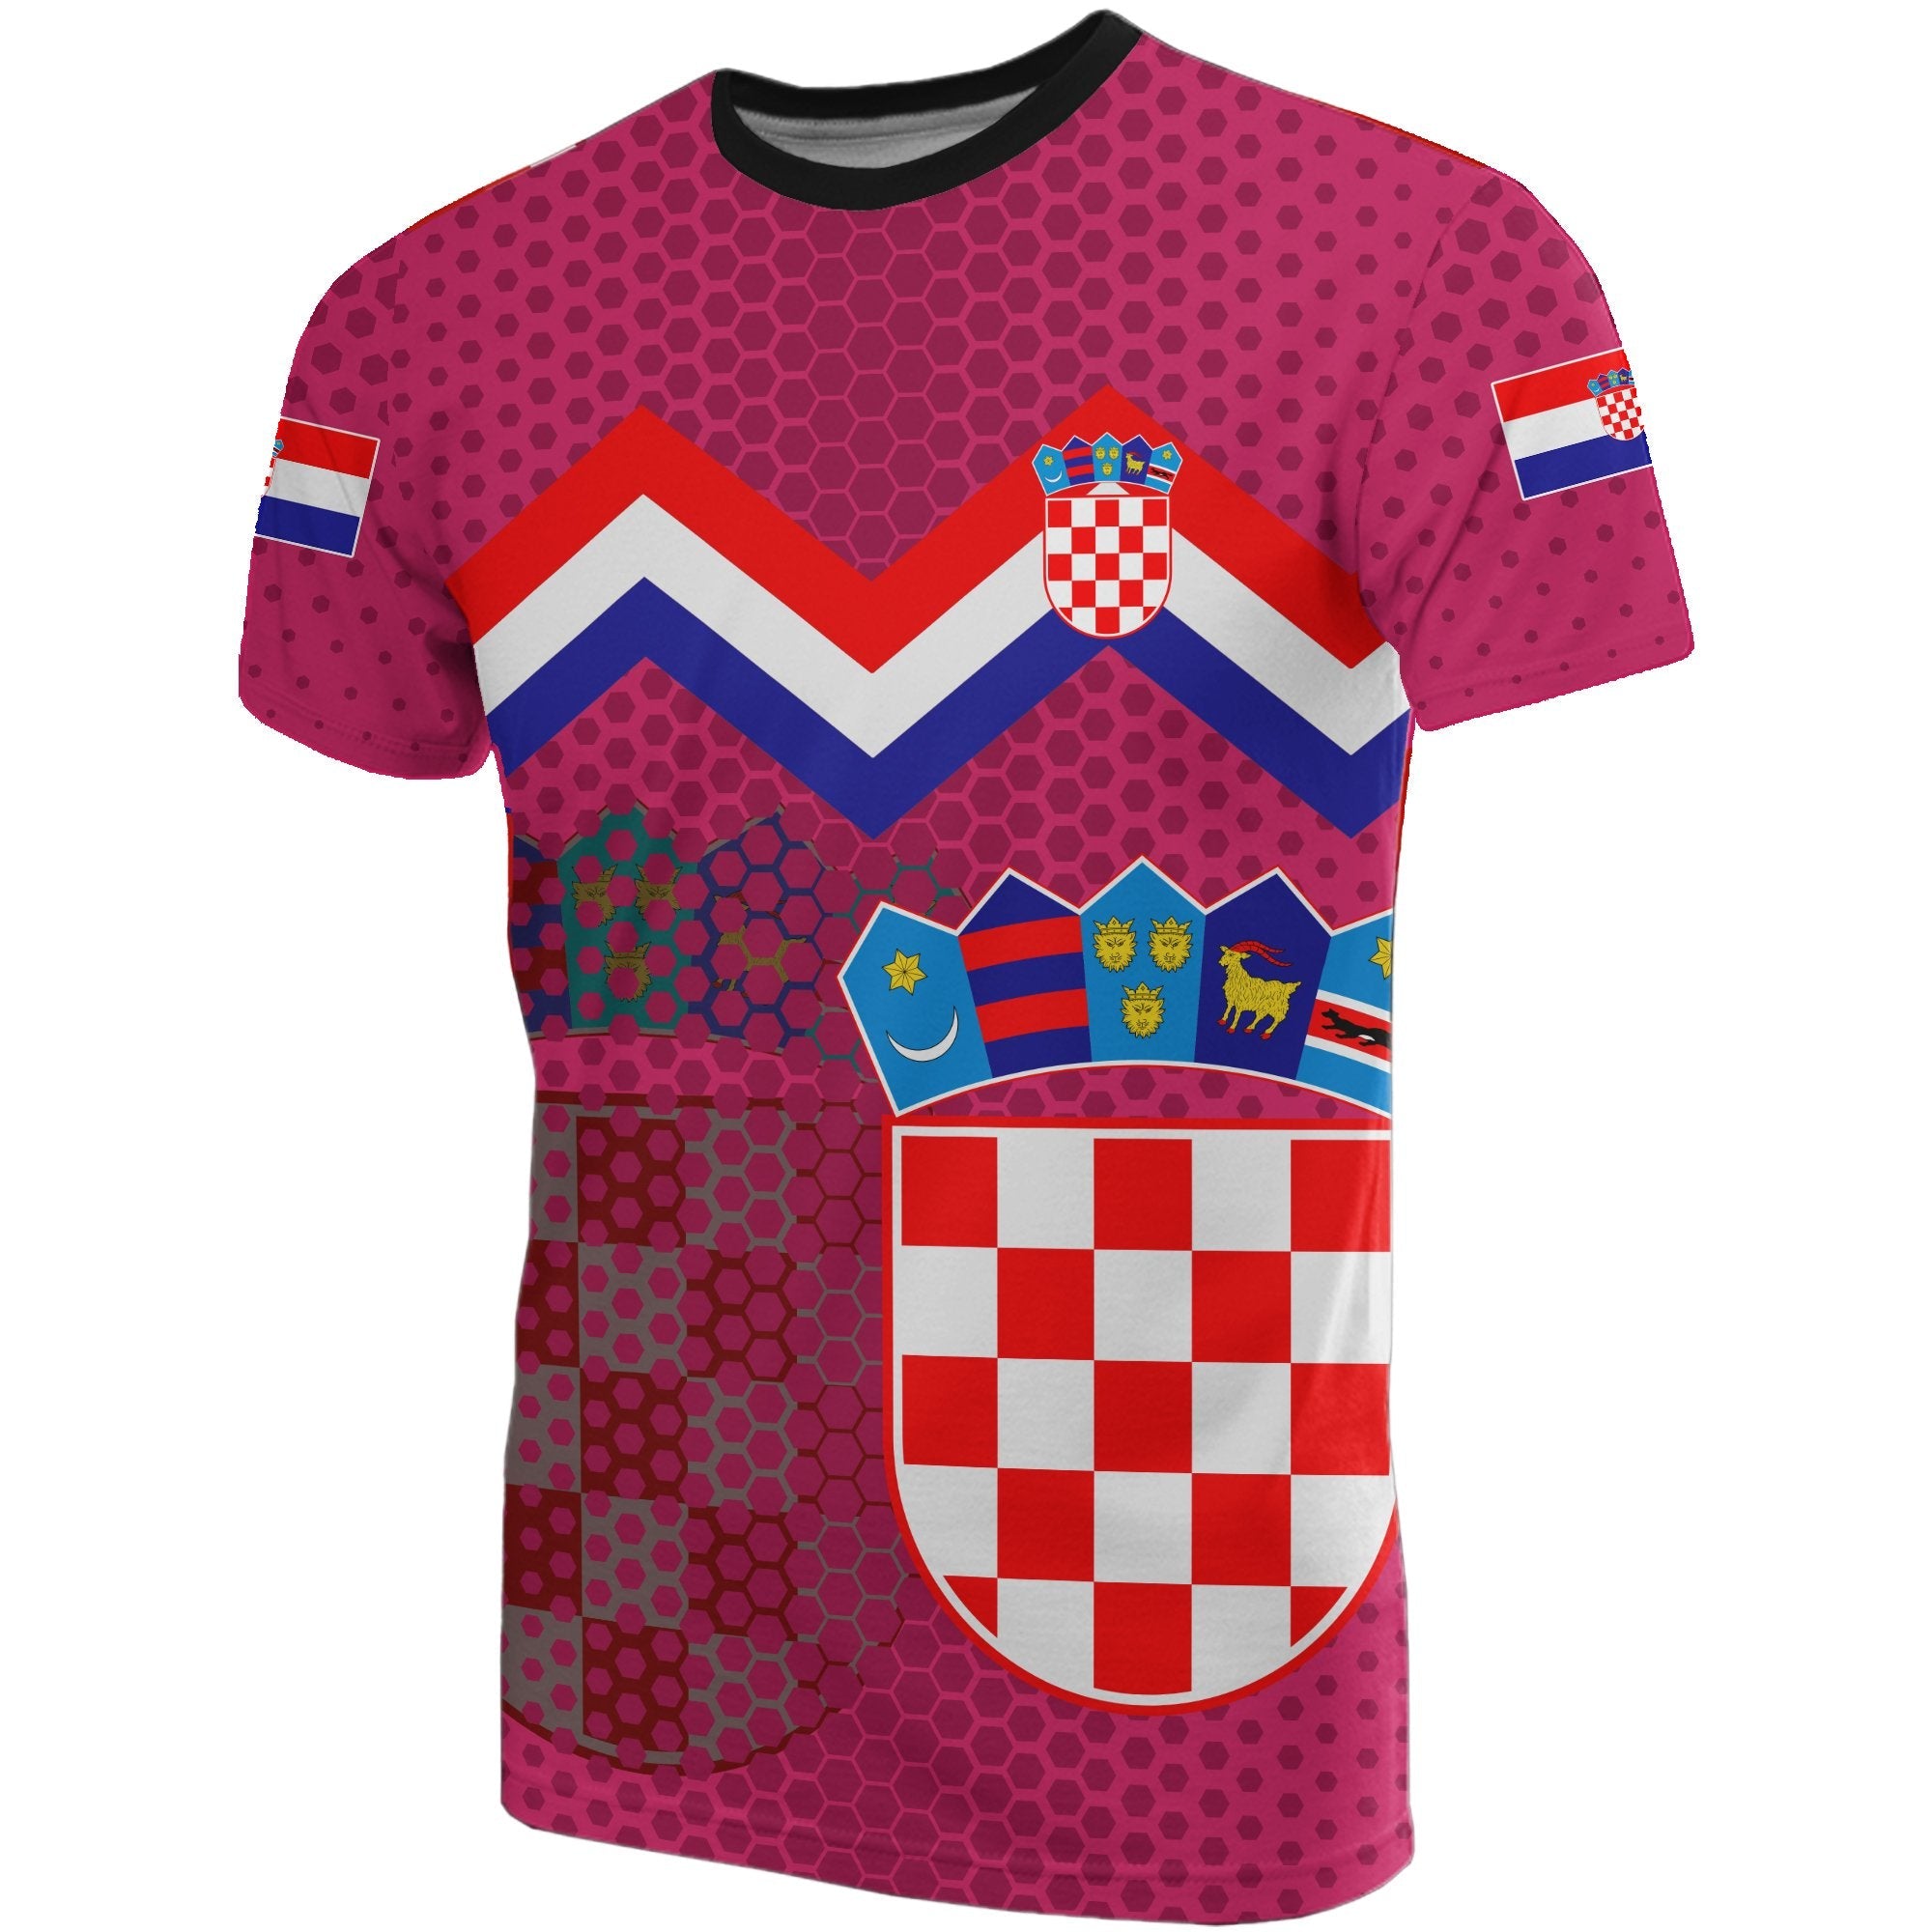 hrvatska-croatia-coat-of-arms-t-shirt-pink